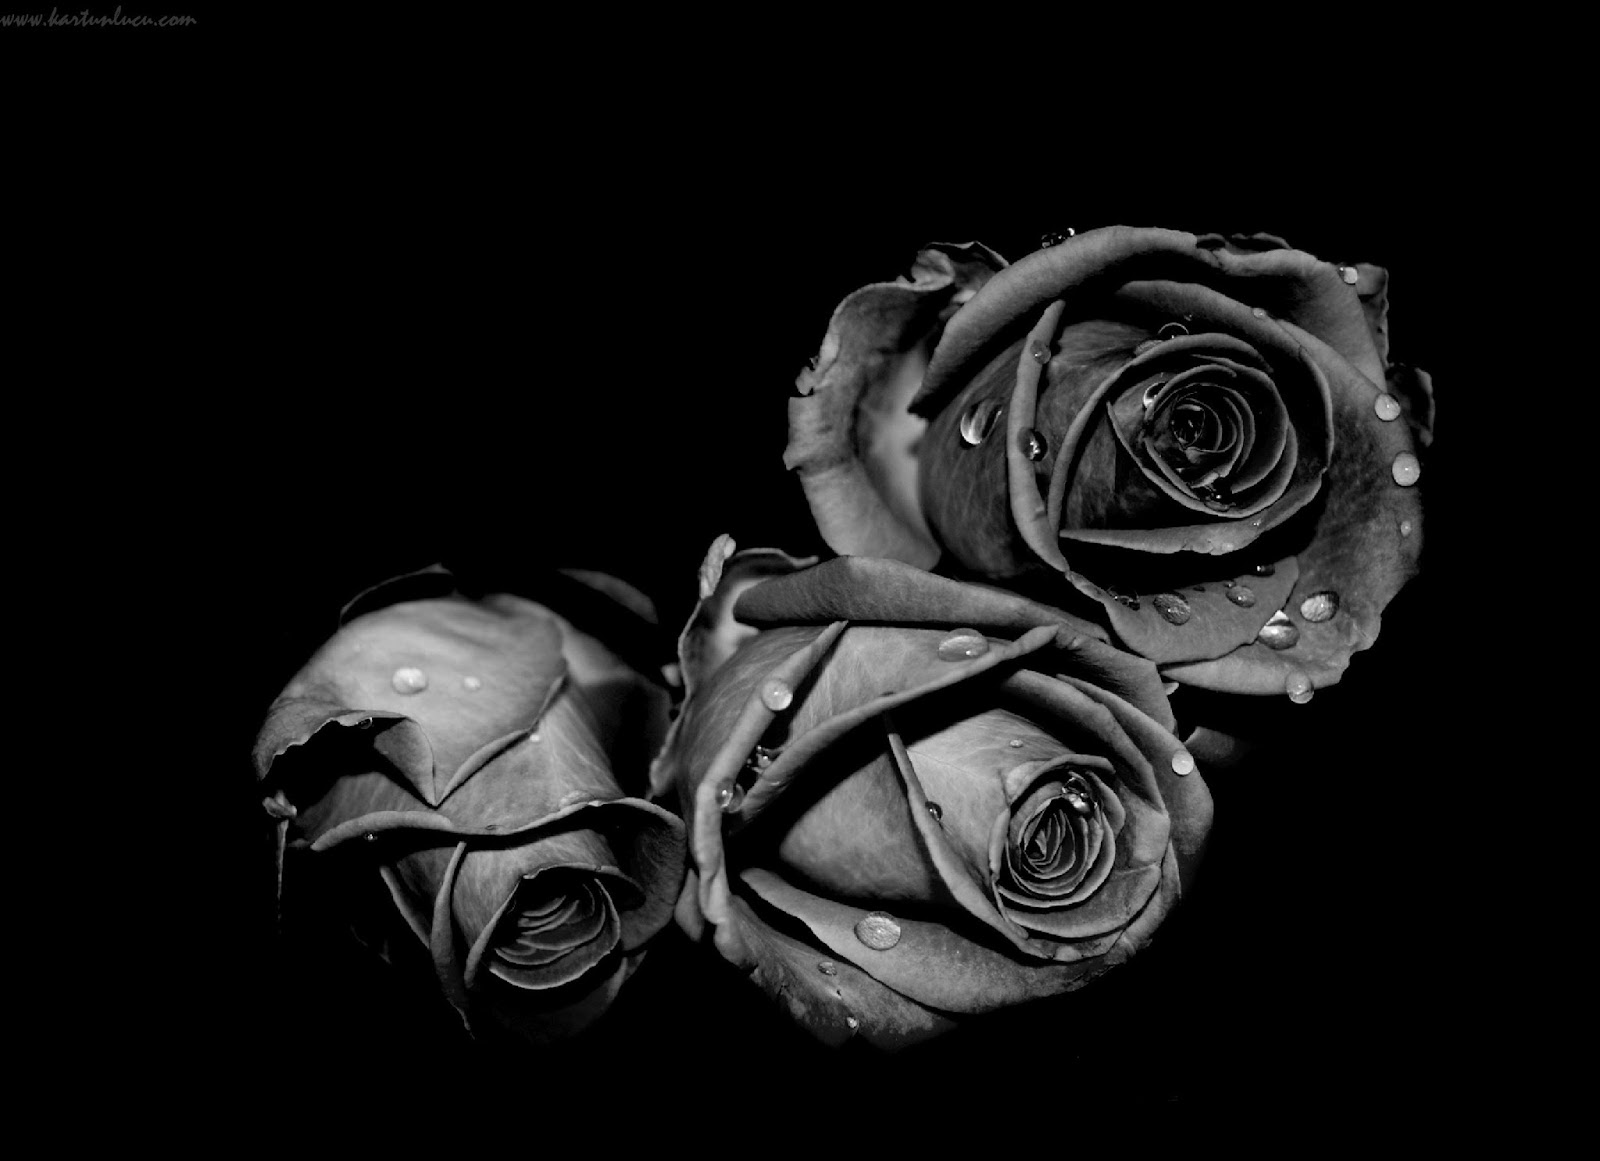 tapete hitam putih,schwarz,monochrome fotografie,stillleben fotografie,weiß,schwarz und weiß